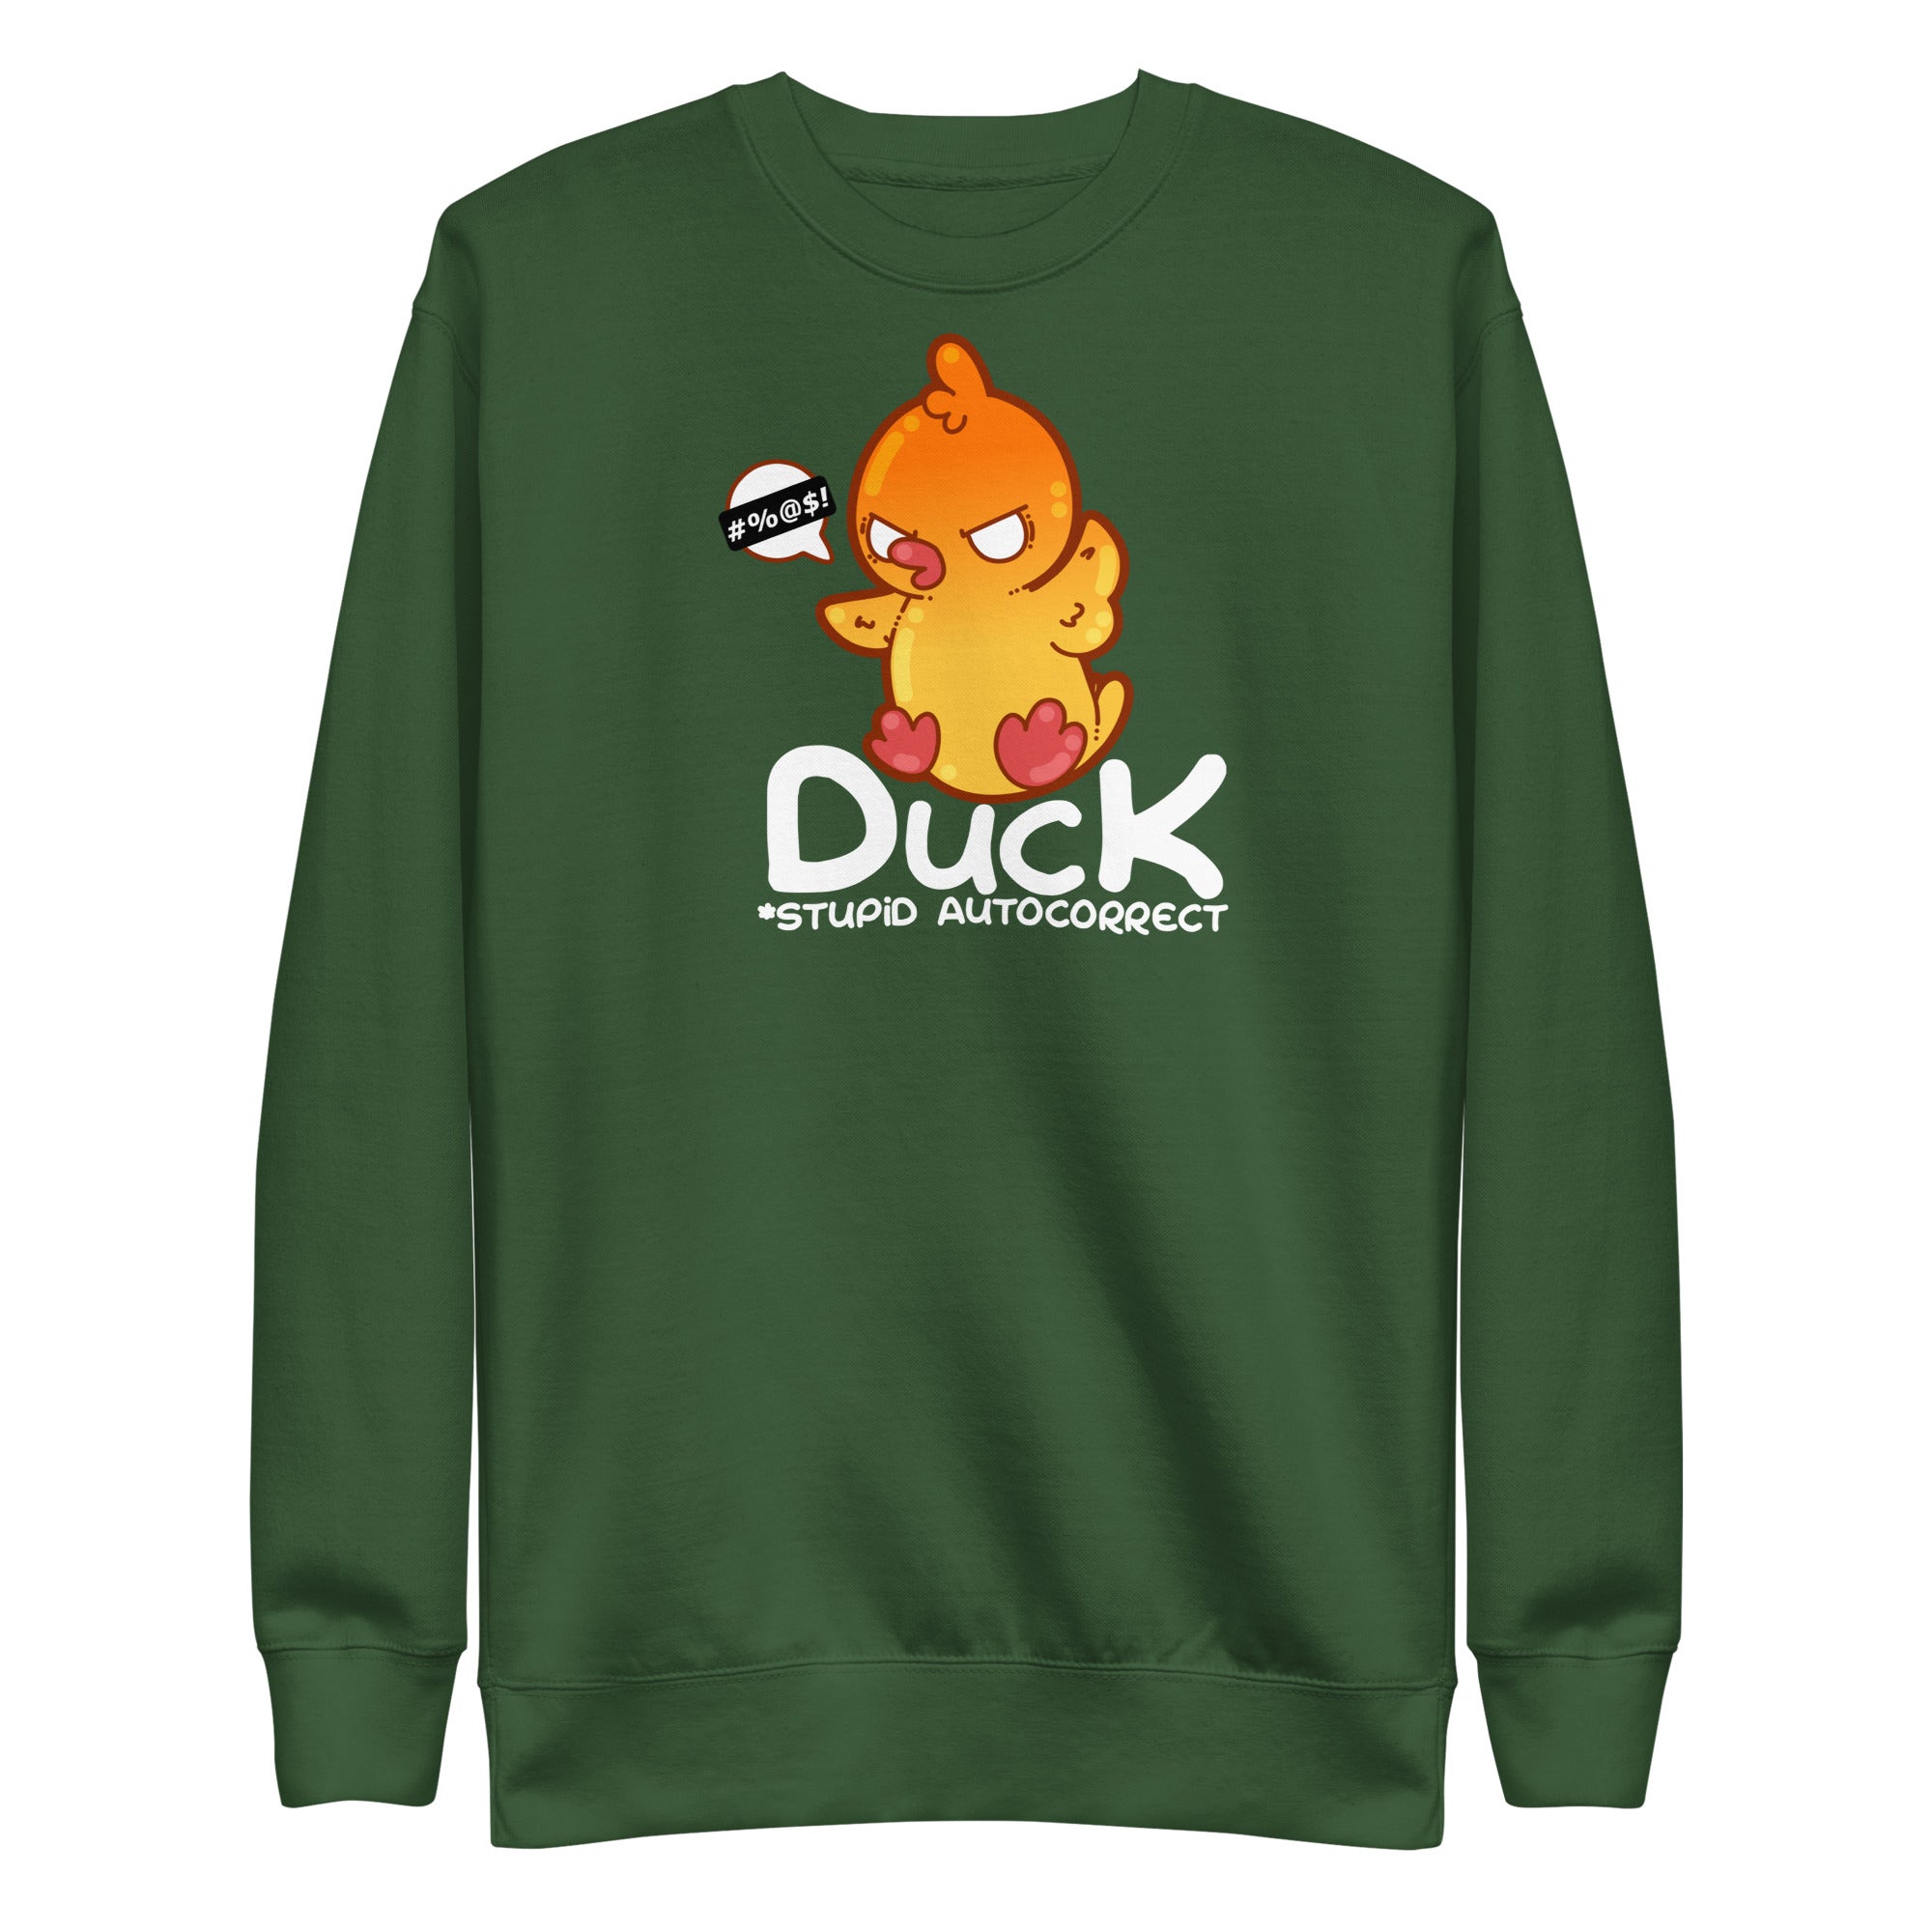 DUCK STUPID AUTOCORRECT - Modded Sweatshirt - ChubbleGumLLC